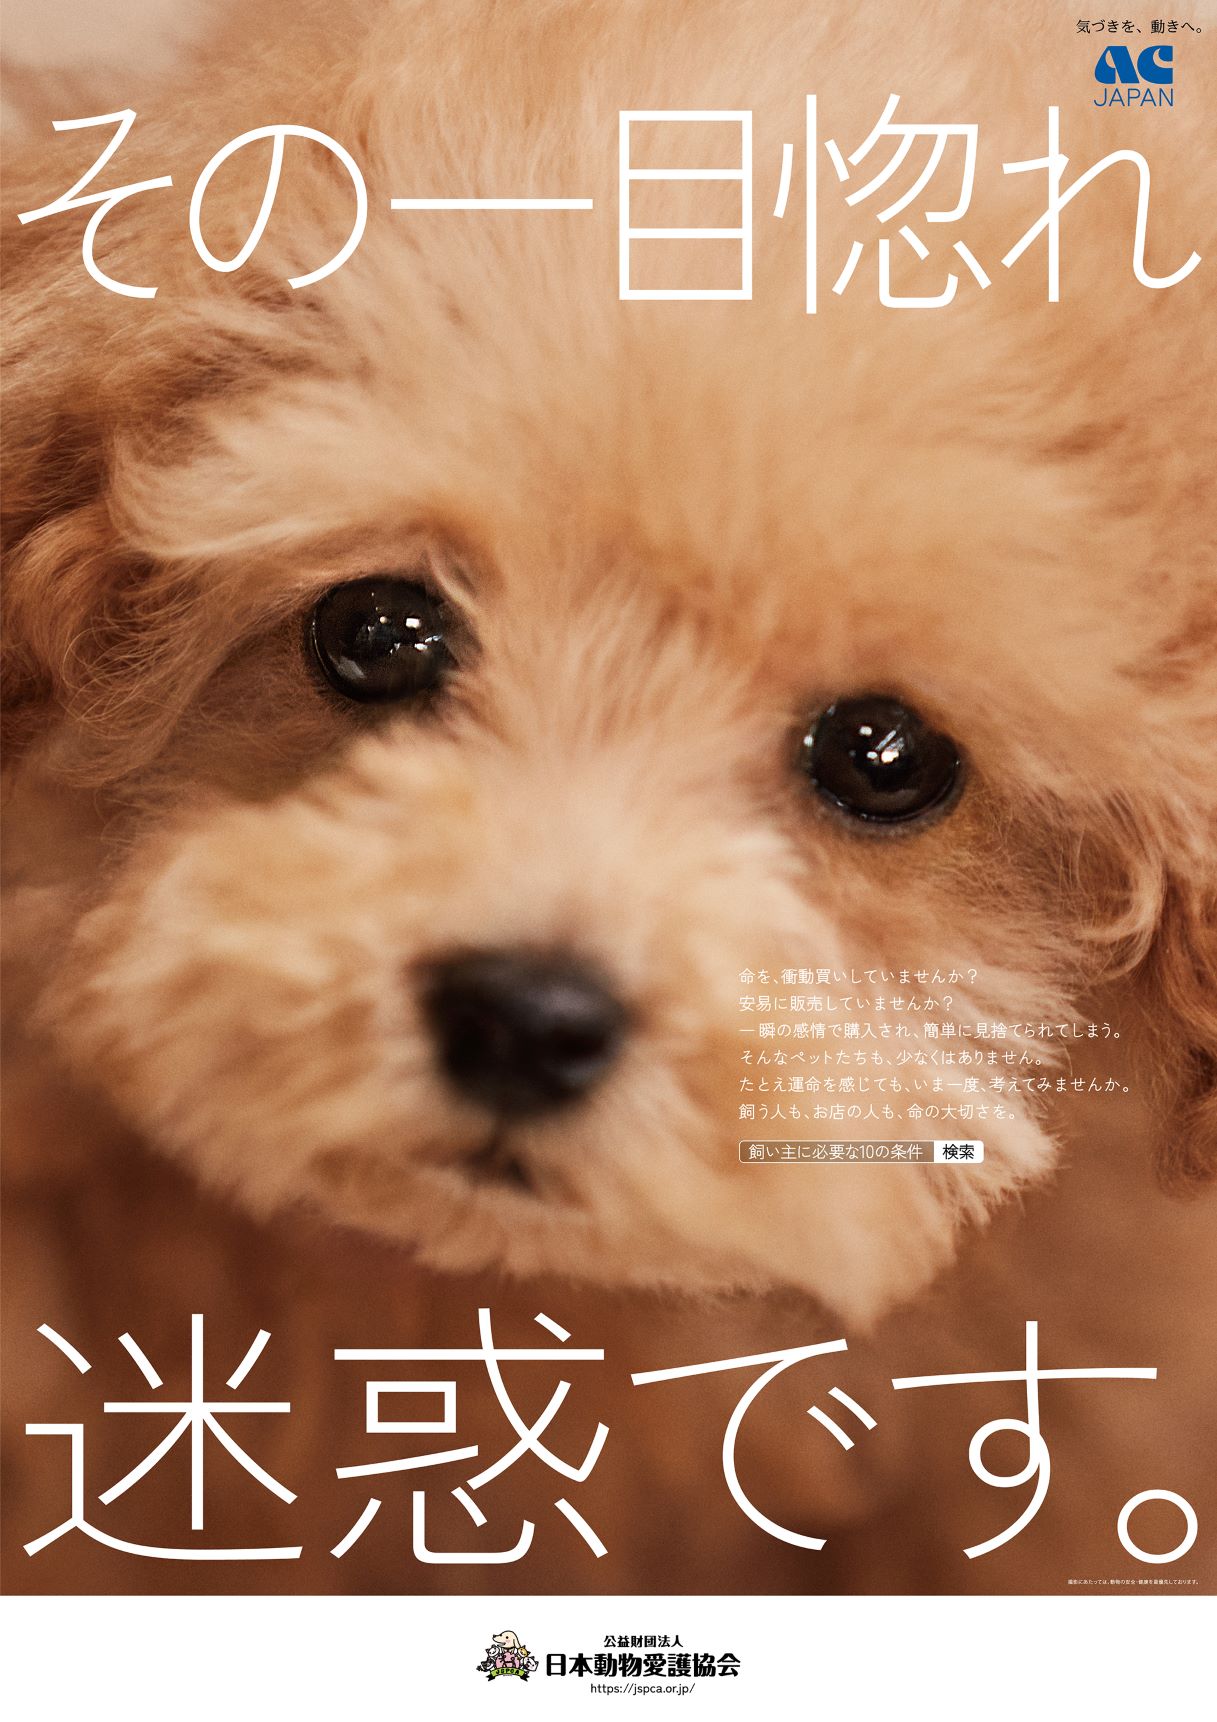 Wanderland Jspca 世界一ゆるい 犬飼育のマナー動画 公益財団法人 日本動物愛護協会